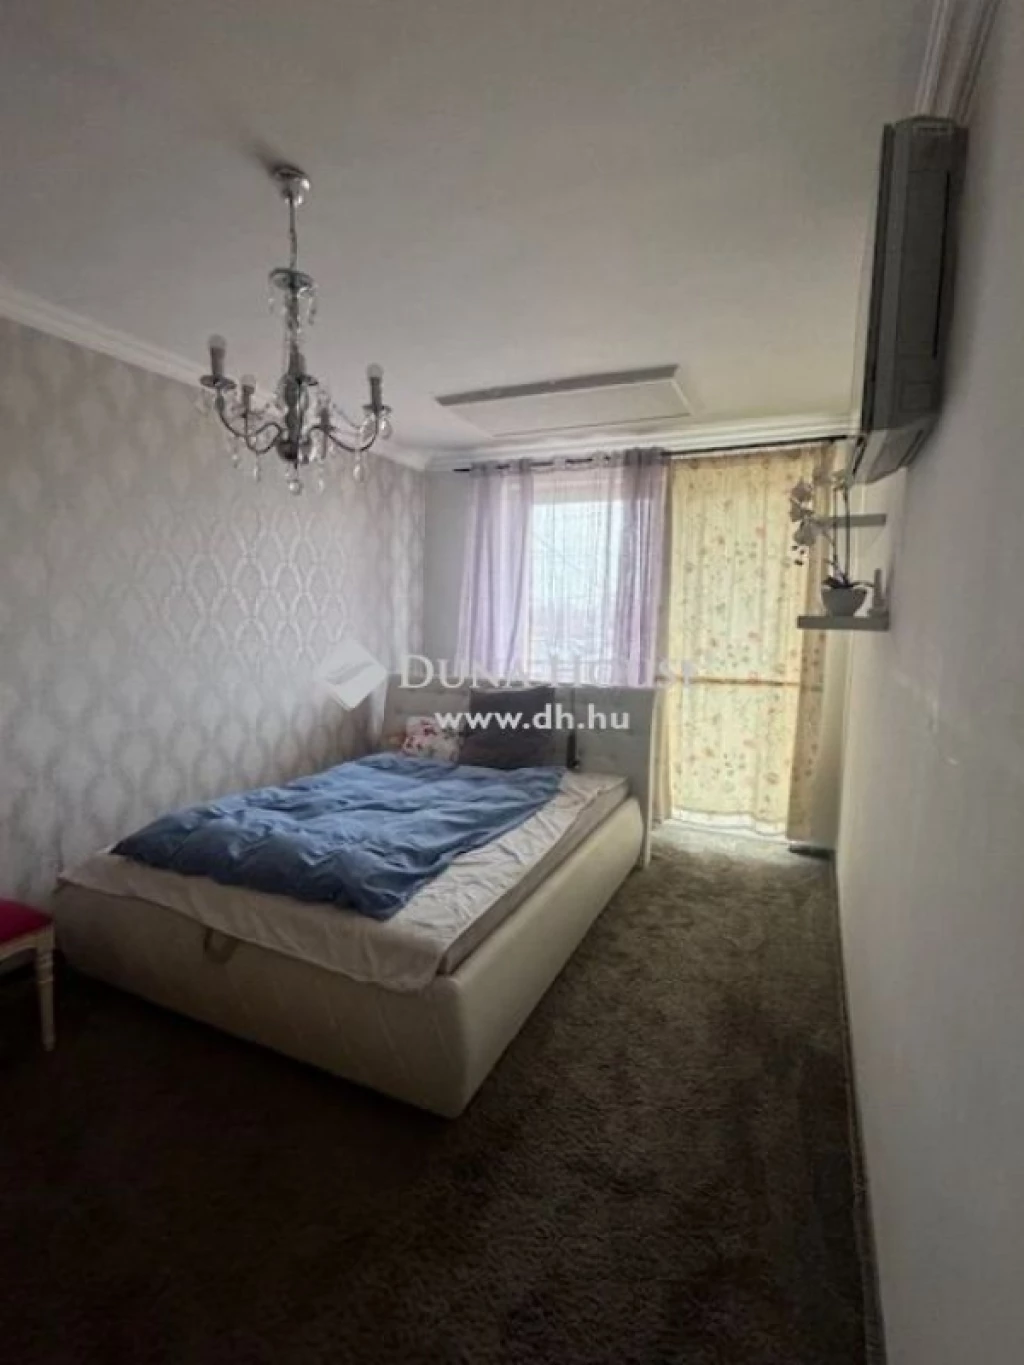 For rent semi-detached house, Debrecen, Veres Péter-kert, Vámospércsi út